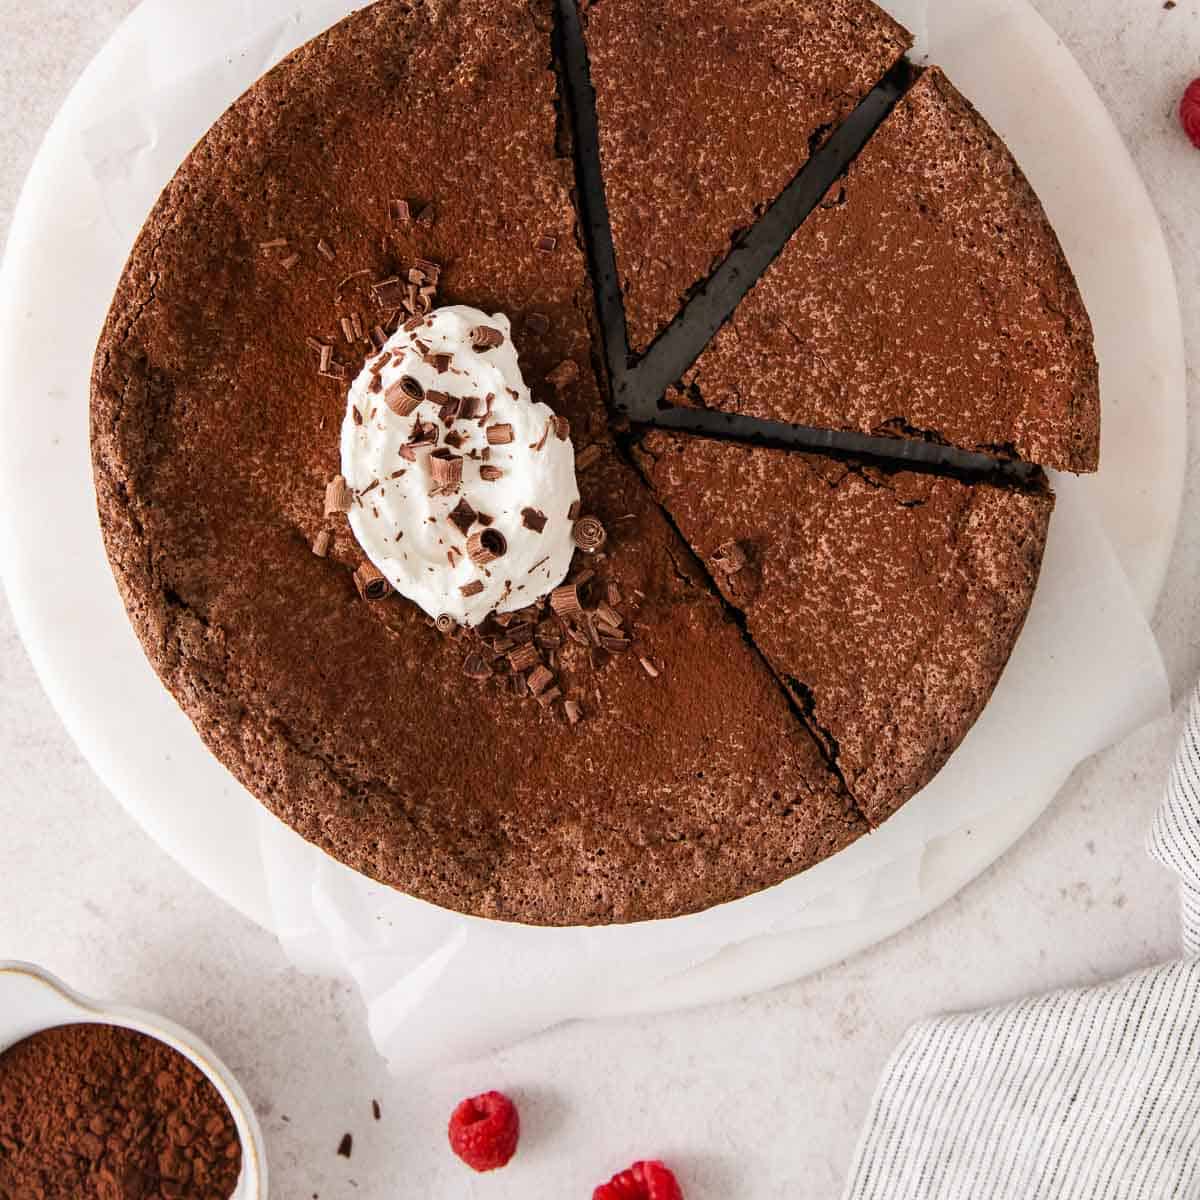 https://meaningfuleats.com/wp-content/uploads/2023/01/flourless-chocolate-torte.jpg